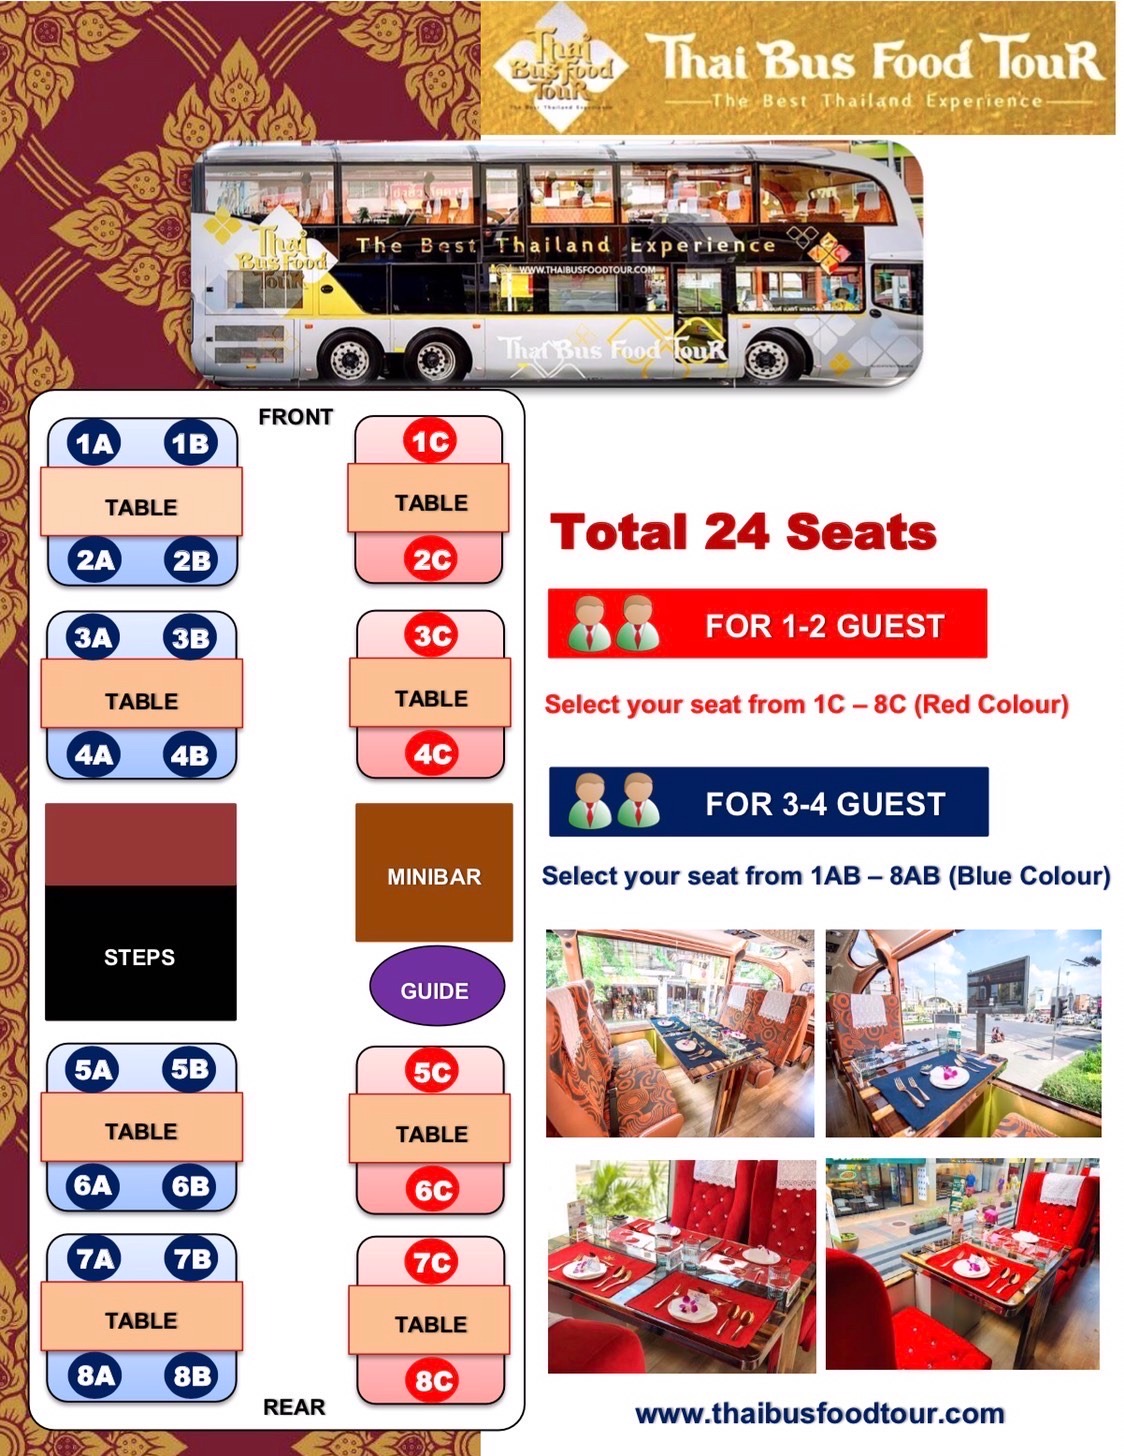 MUSHEASY 115 แพ็กเกจ Thai Bus Food Tour ชมเมืองรอบเกาะรัตนโกสินทร์ ราคาเริ่มต้น 650 บาท ตั้งแต่วันนี้ – 31 ธันวาคม 2565